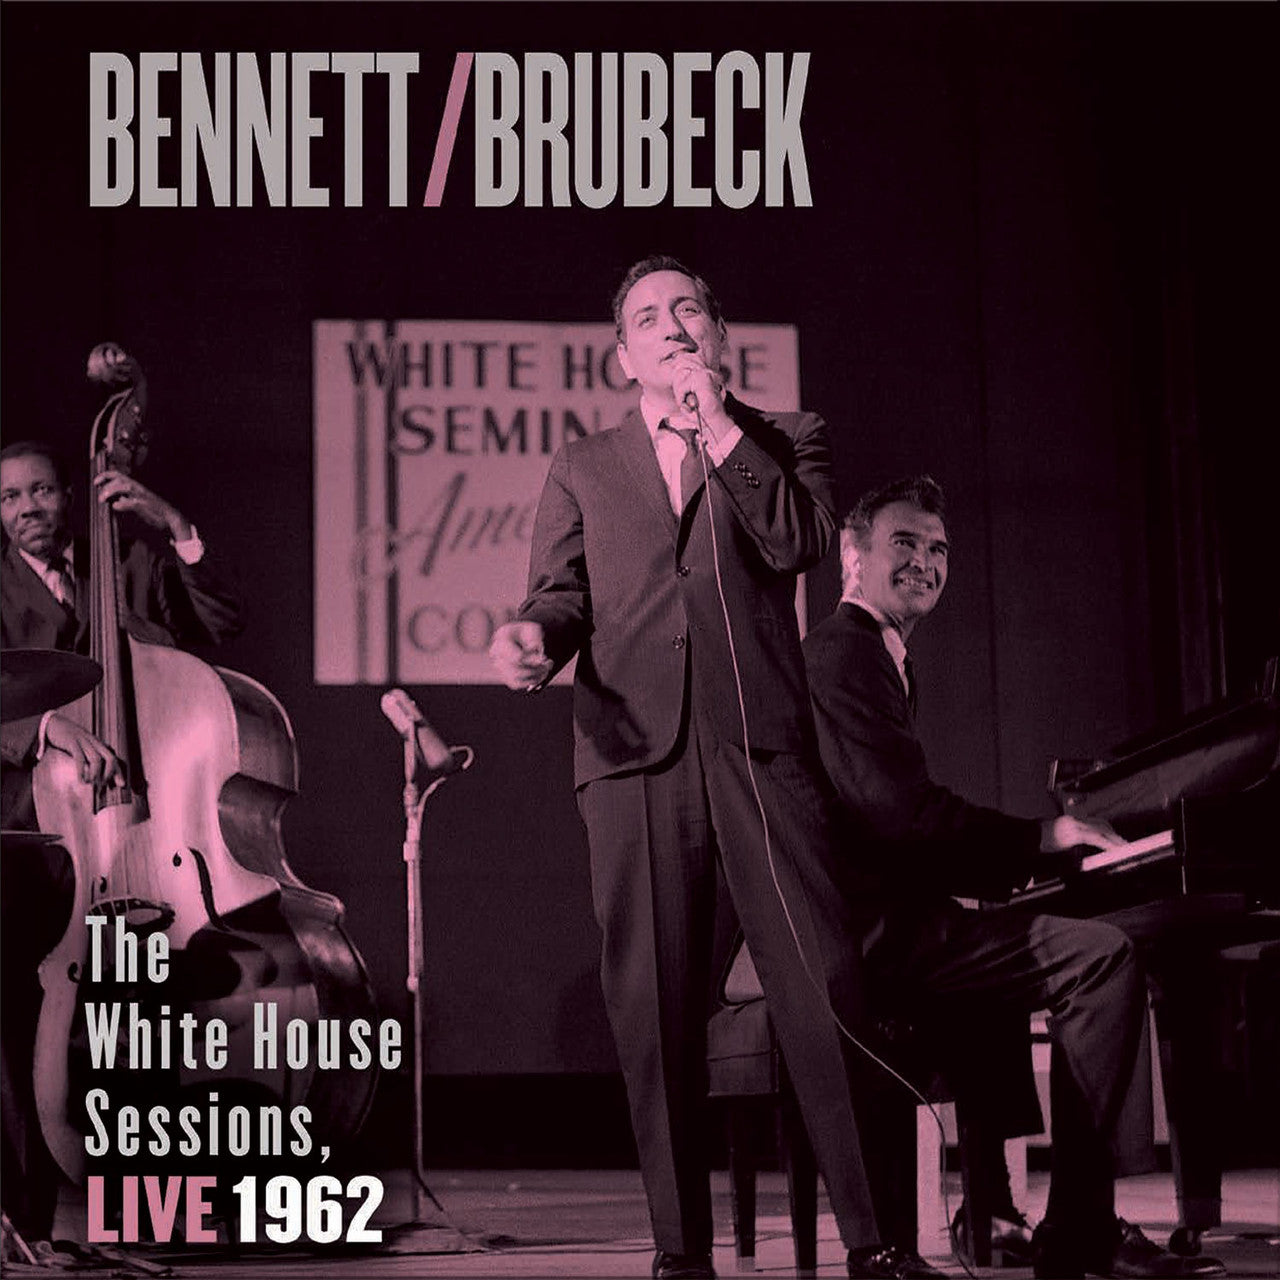 Tony Bennett & Dave Brubeck - The White House Sessions Live 1962